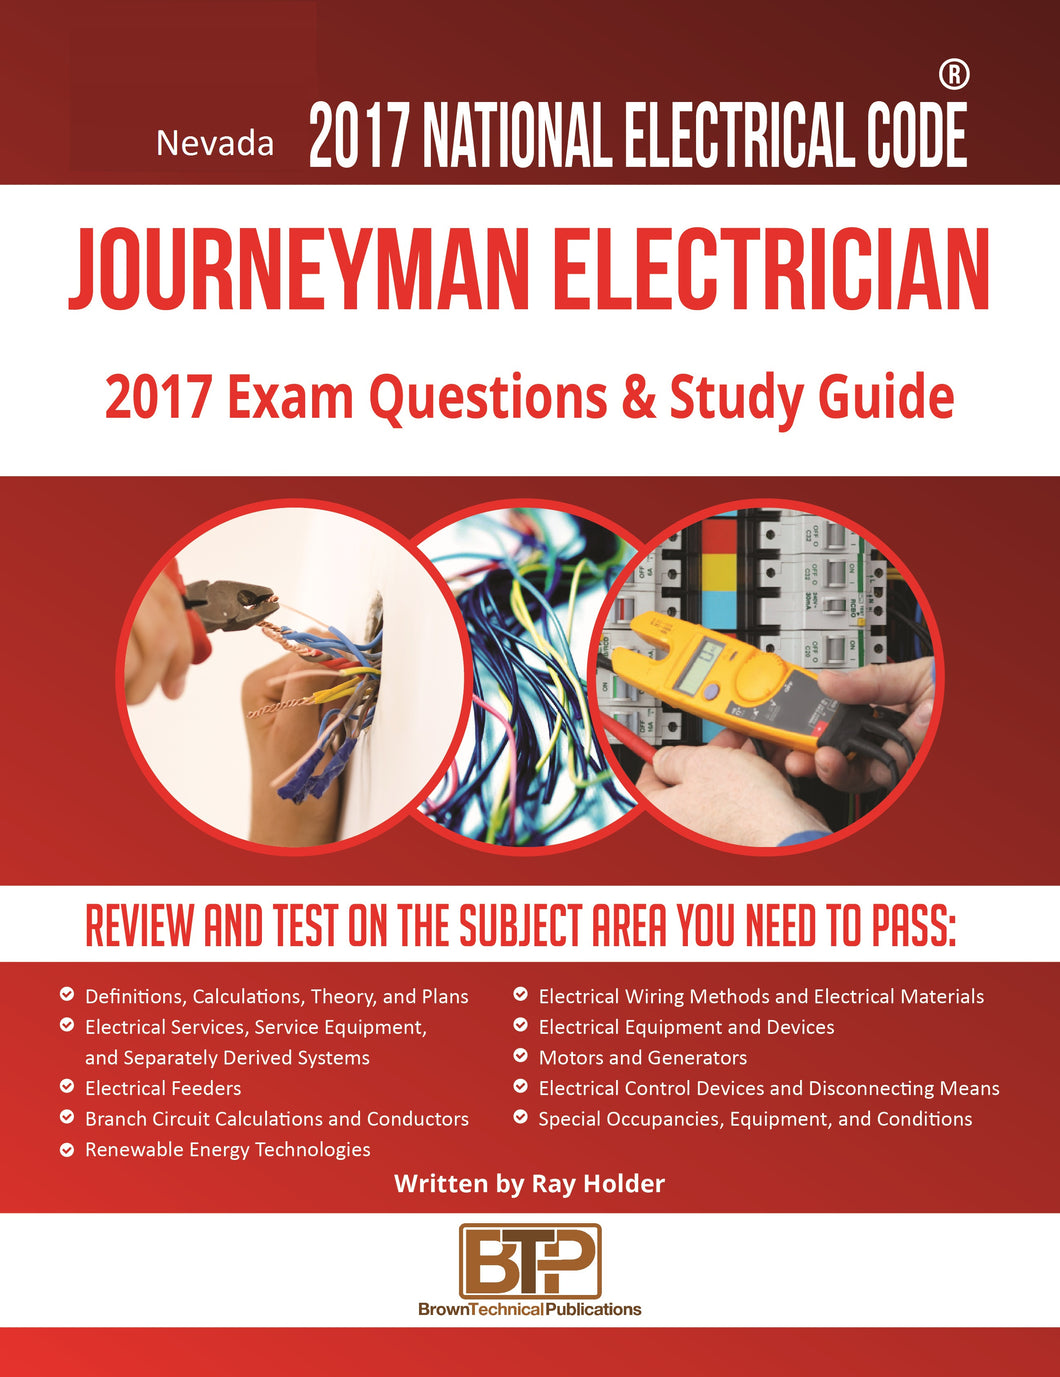 Nevada 2017 Journeyman Electrician Study Guide